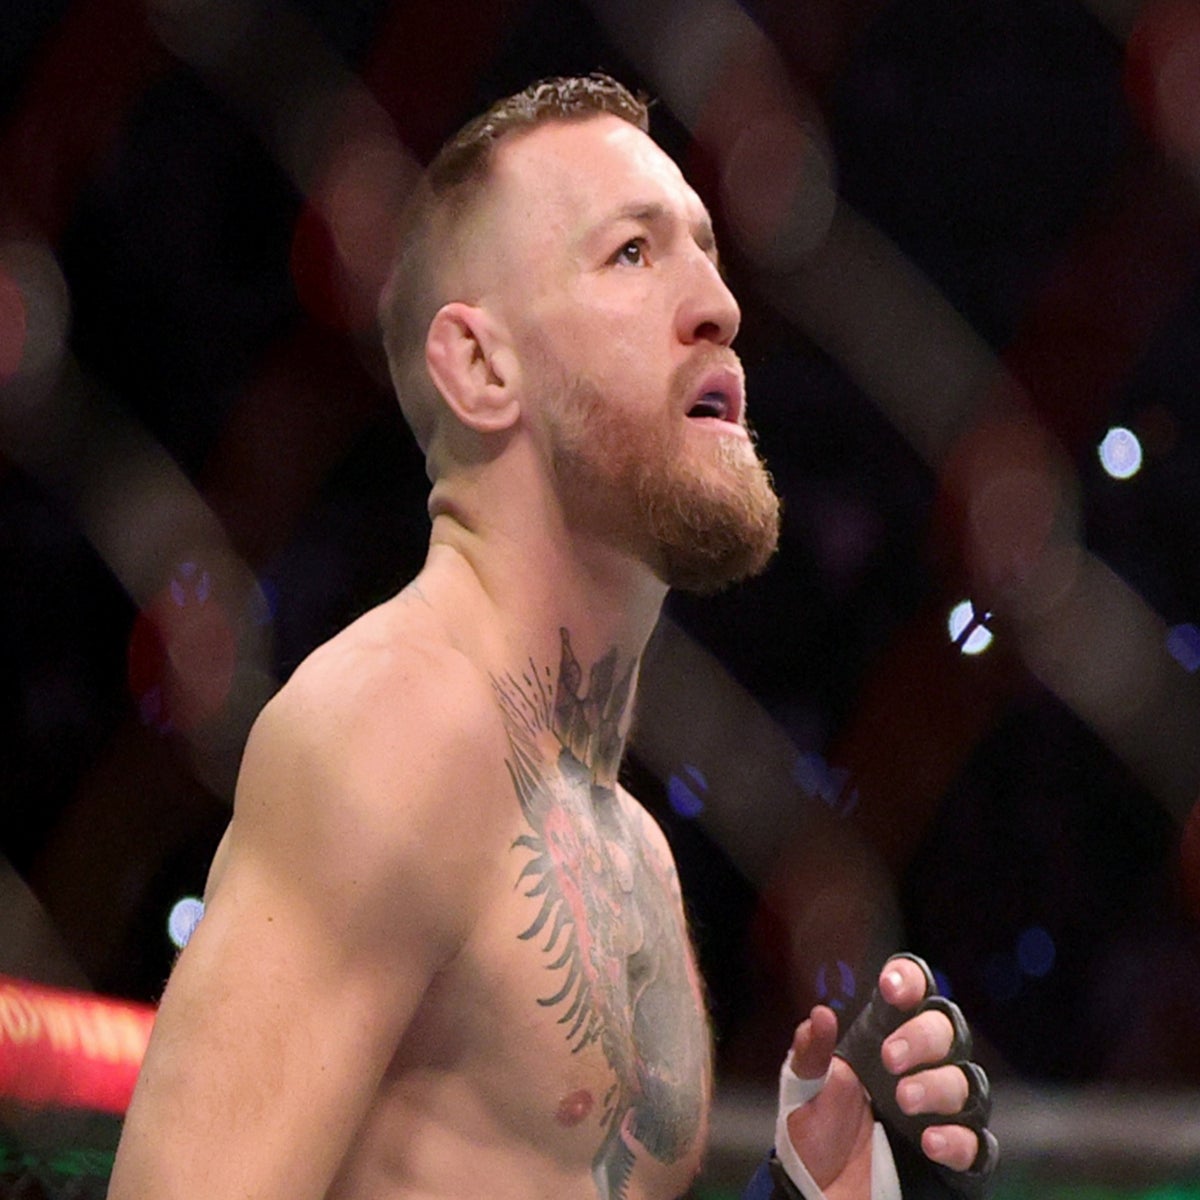 Dana White Gives Update On Conor McGregor's UFC Return & USADA Status